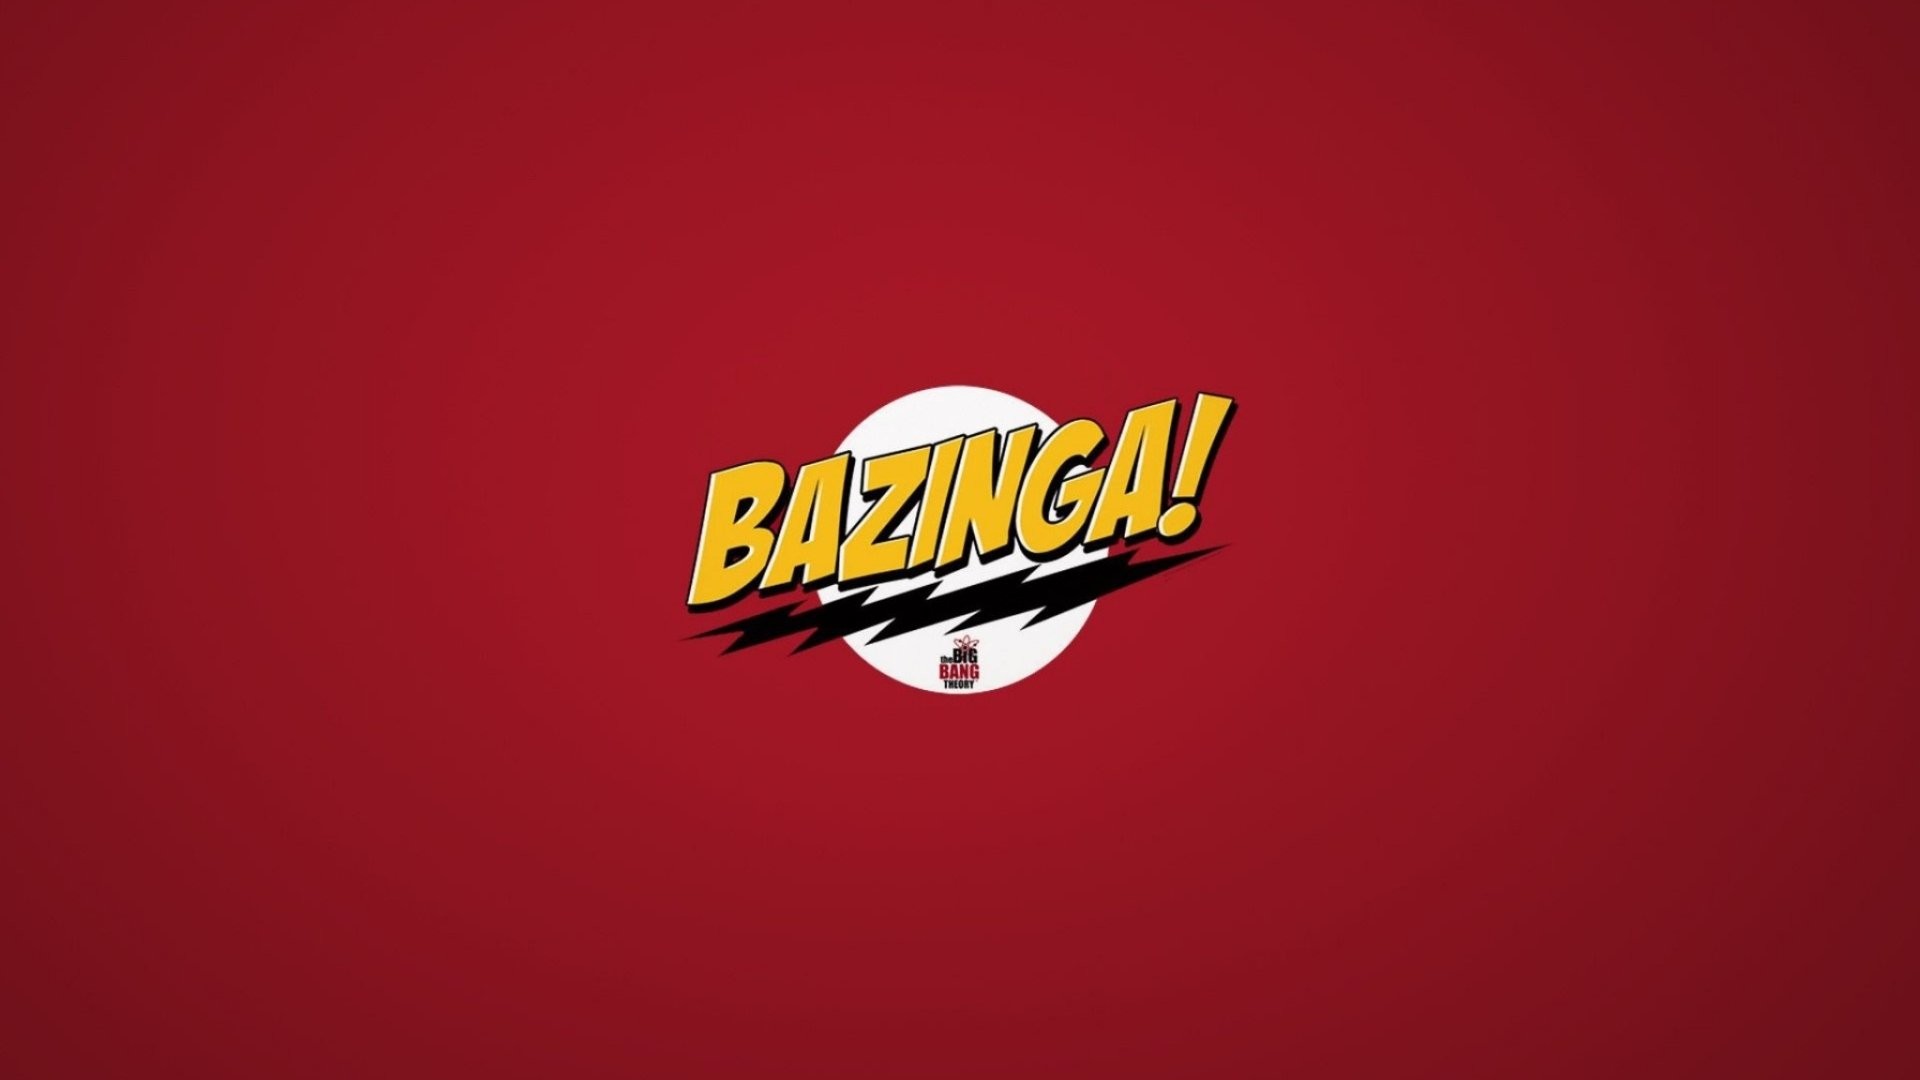 1920x1080 Fernsehserien - The Big Bang Theory Bazinga Logo Wallpaper